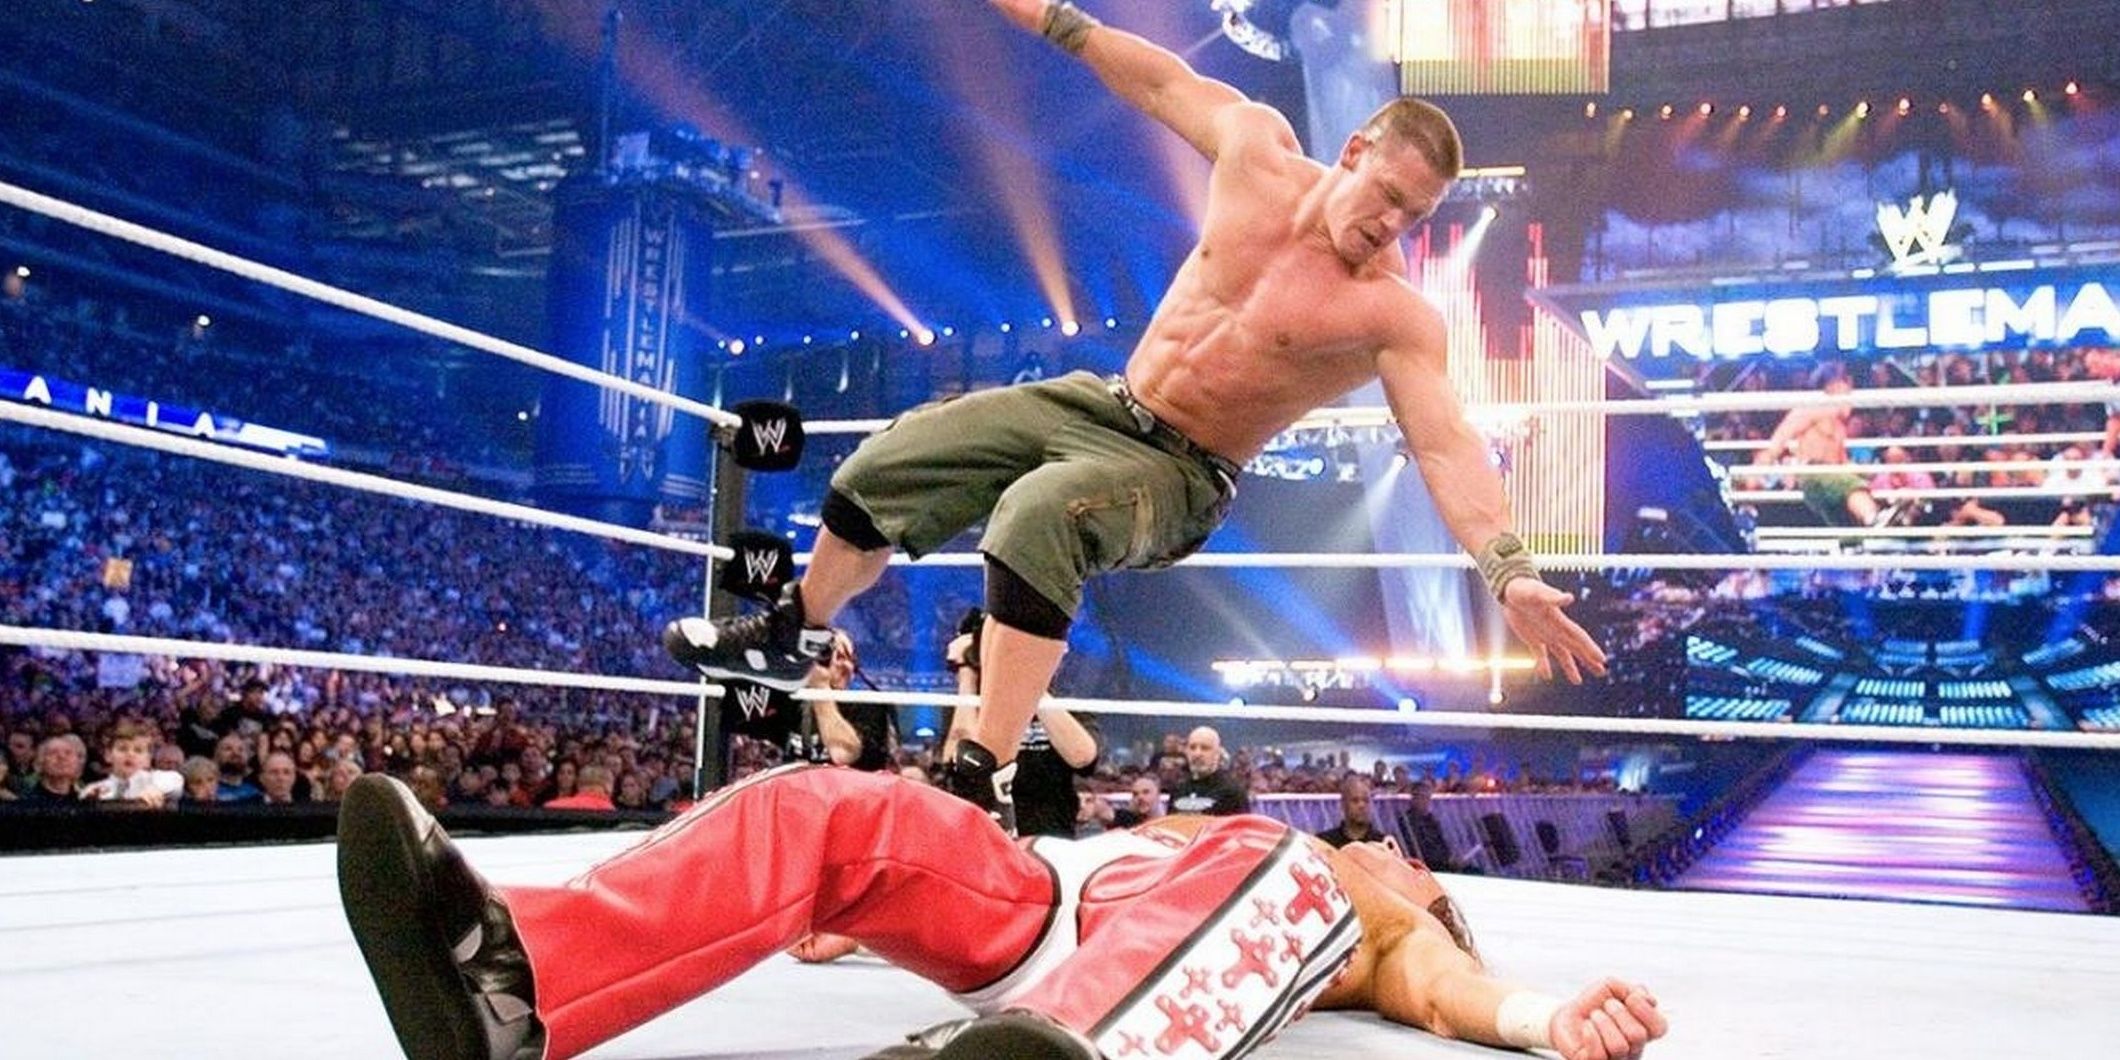 John Cena and Shawn Michaels clashing at WrestleMania 23